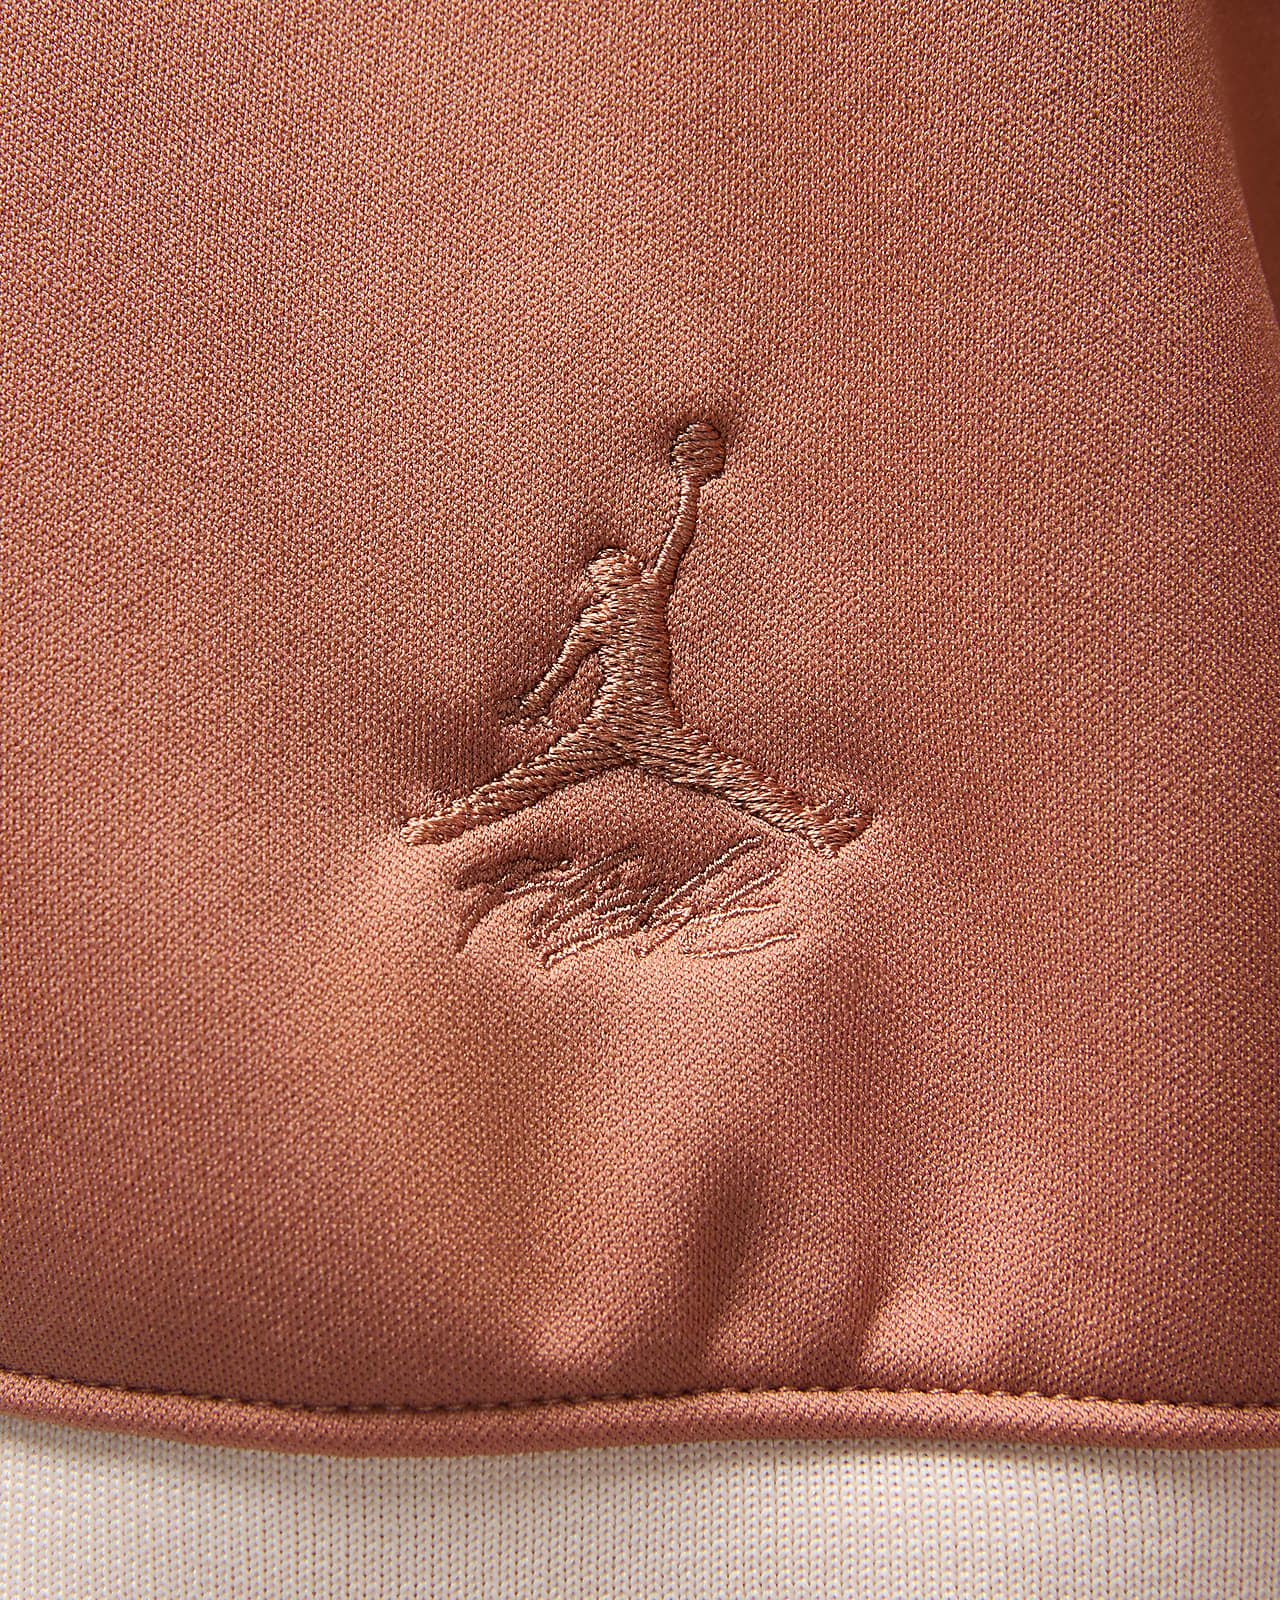 Jordan (Her)itage Women's Suit Top. Nike LU